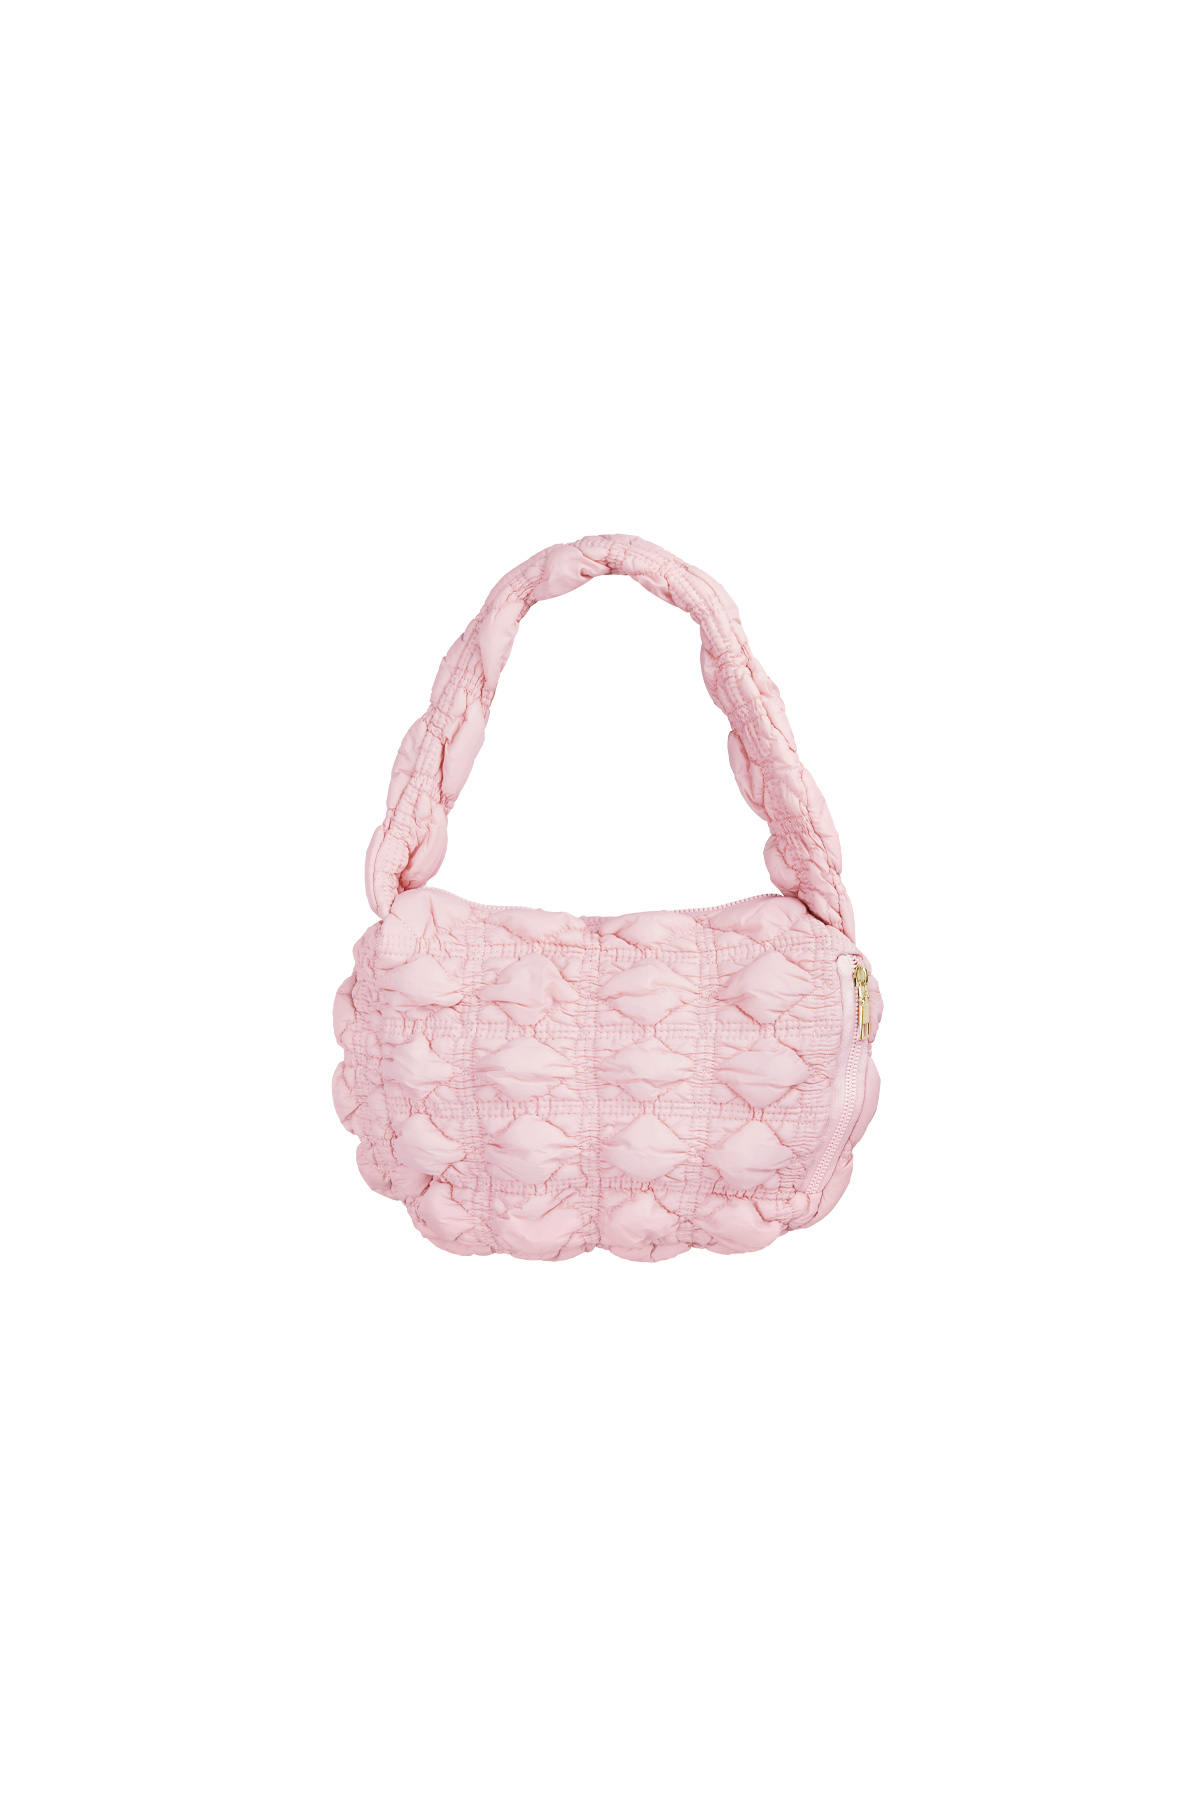 Handbag cloudy love - pink h5 